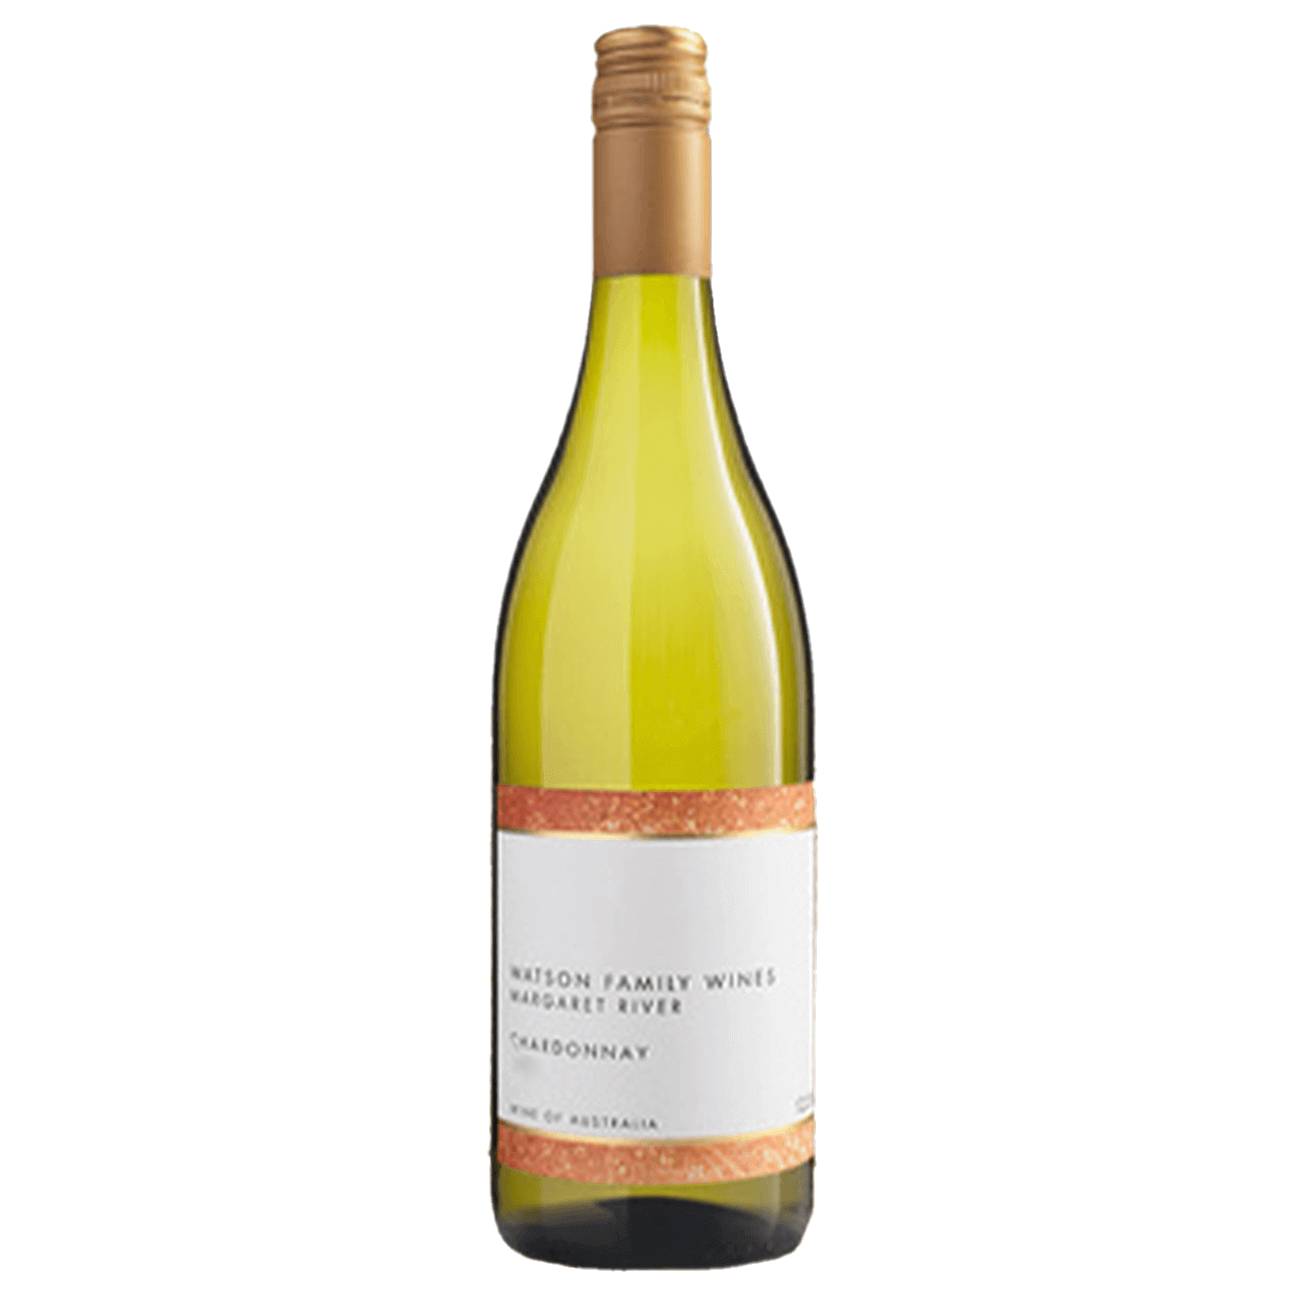 Watson Family Vineyards Chardonnay 2019 White Wine – Margaret River, Australia